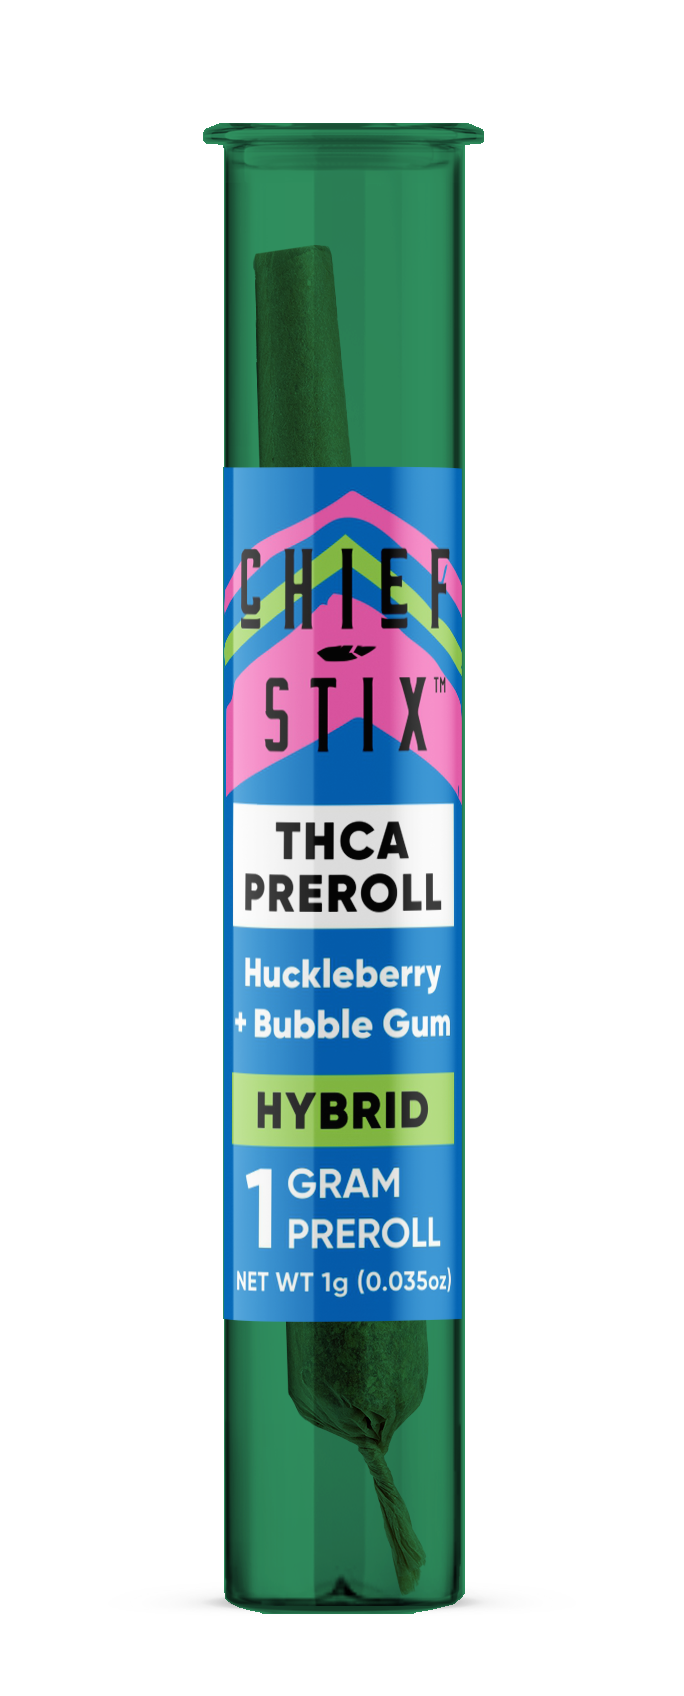 Chief Stix THCA 1 gram Preroll - Hybrid - Huckleberry + Bubblegum